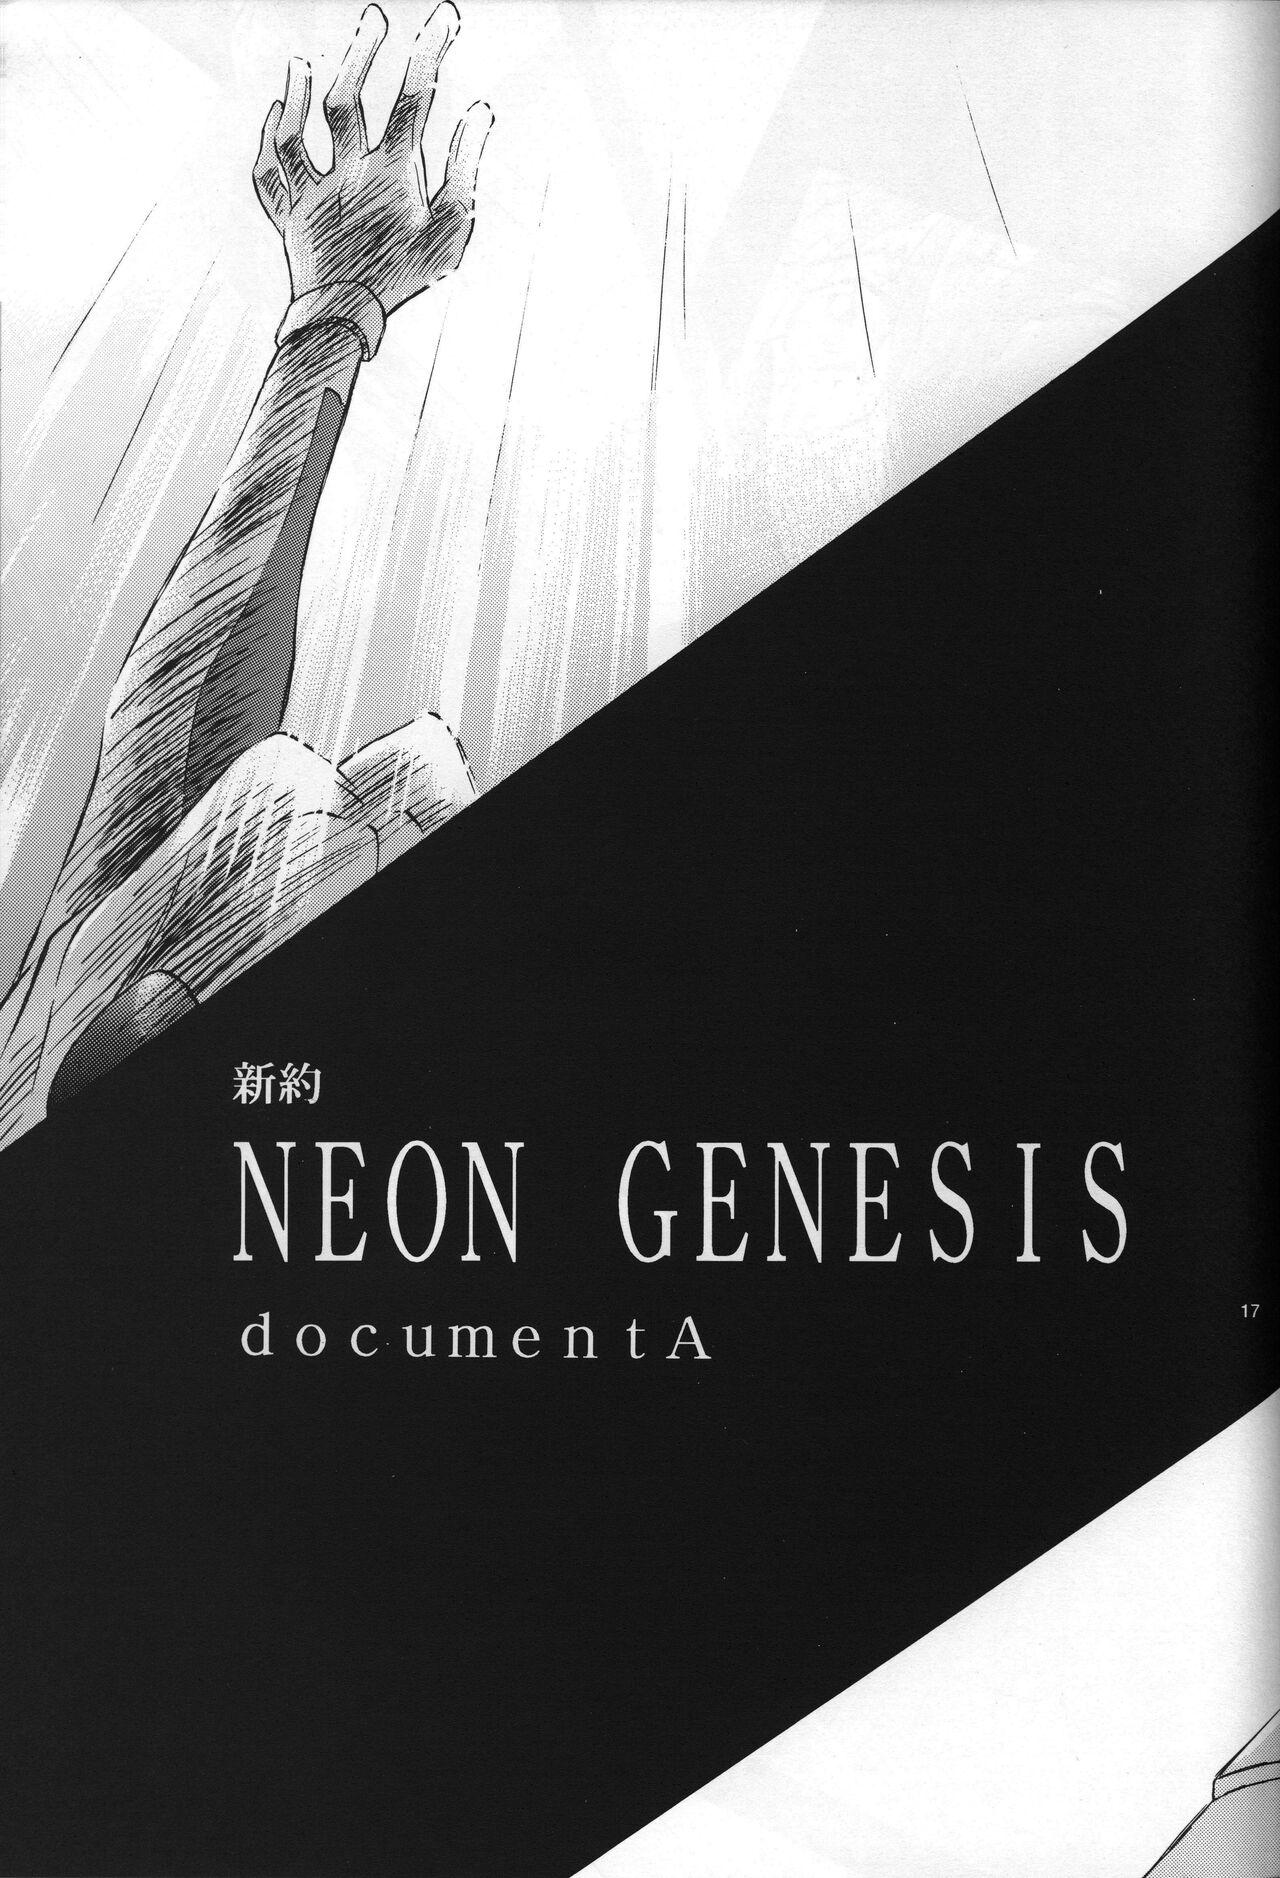 <New Testament> neon genesis documentＡ Episode 0:13-1 17